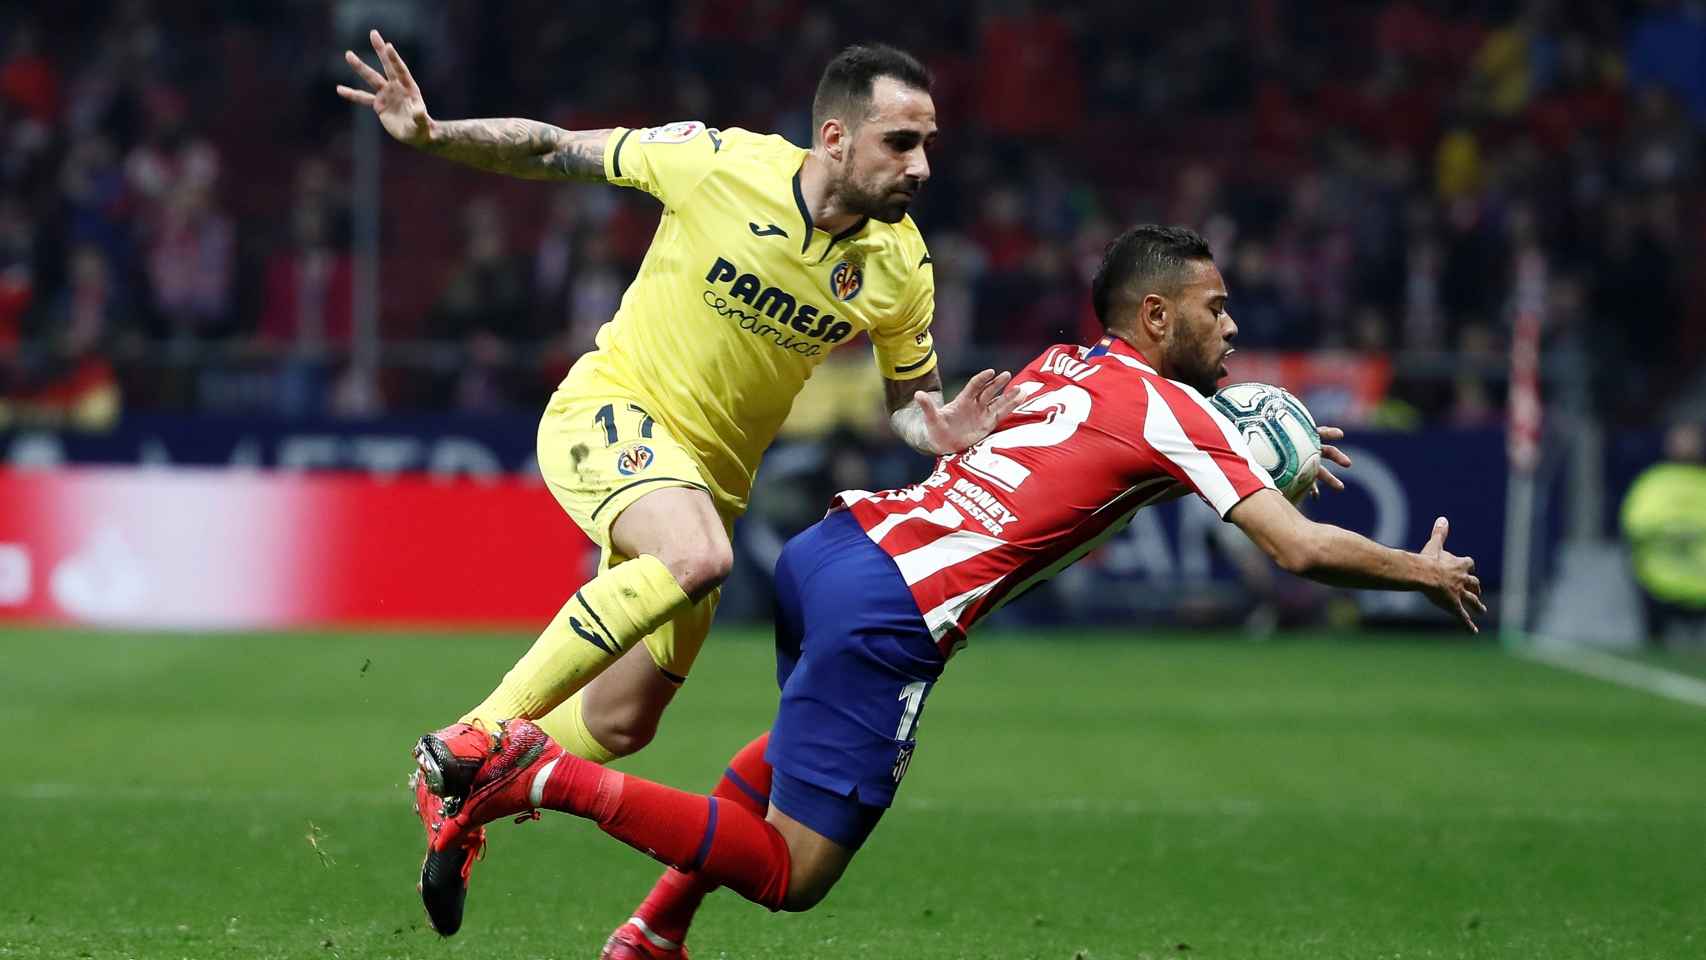 Atlético de Madrid-Villarreal